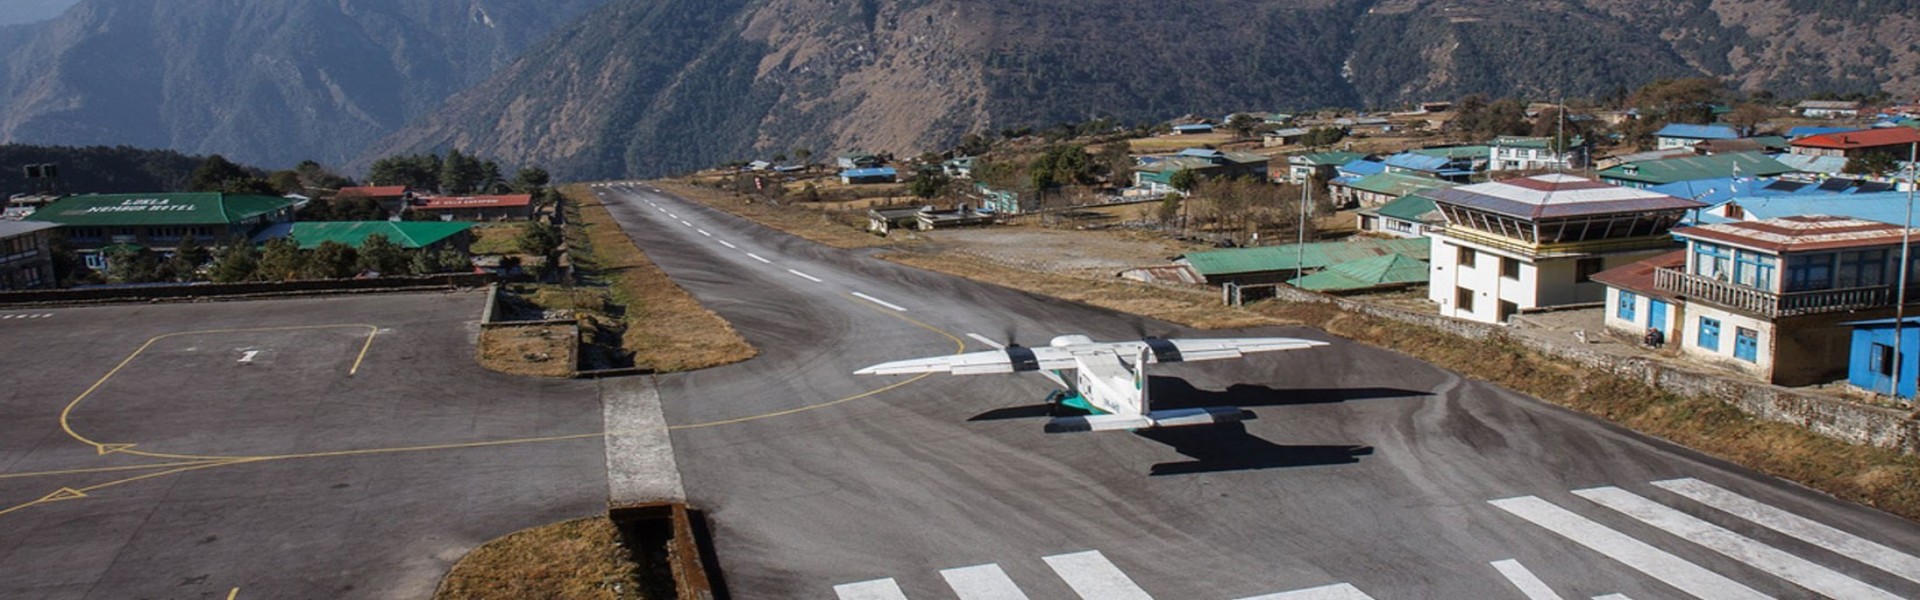 Lukla flight Reroute to Manthali